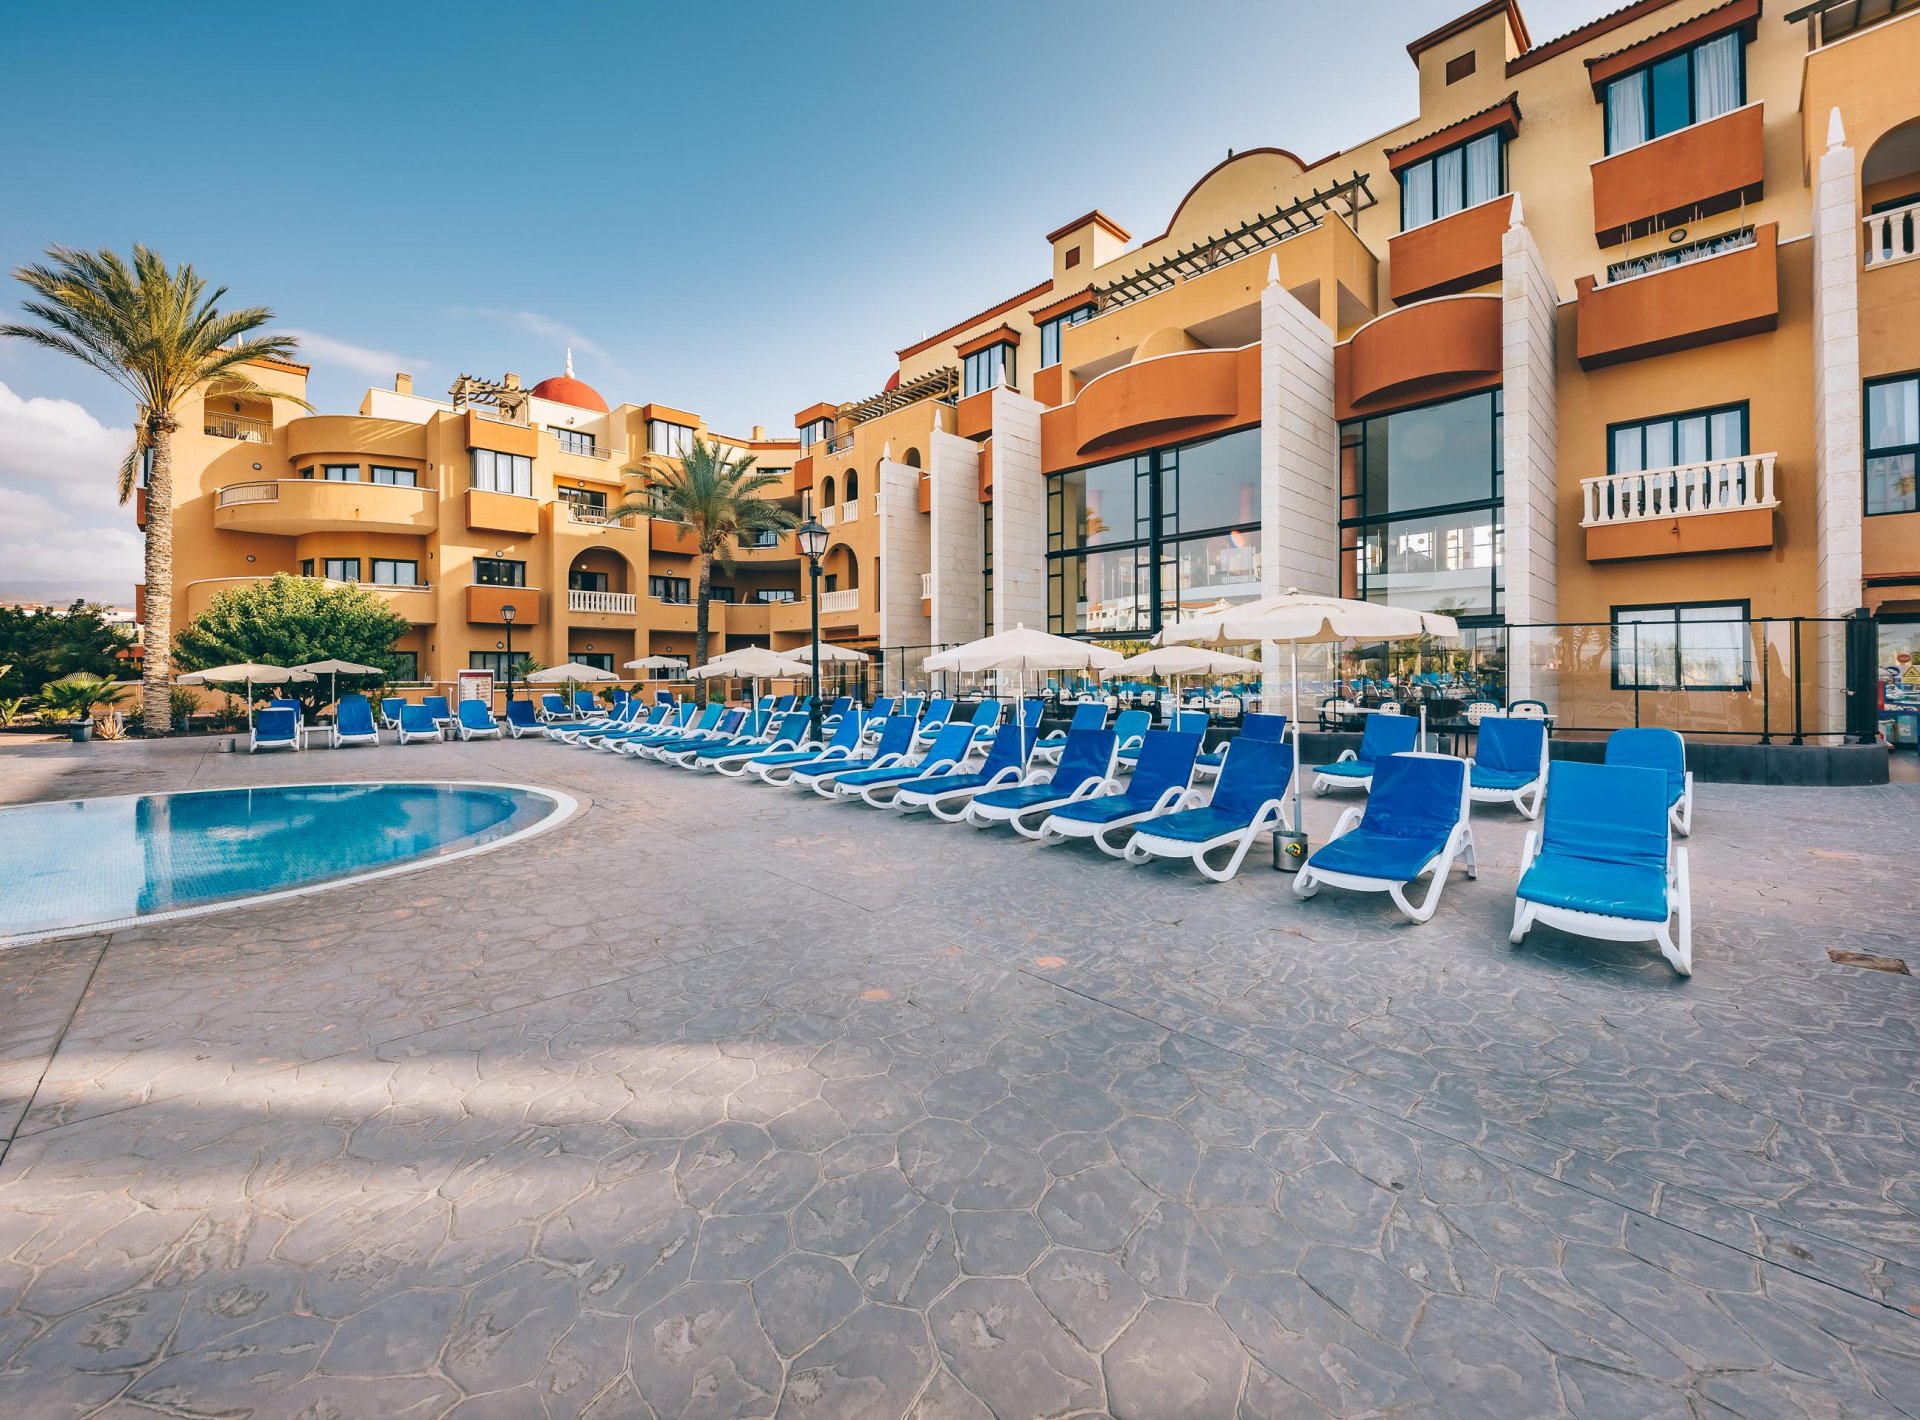 ISholidays Apartment 2 pool/sea view golf plaza tenerife